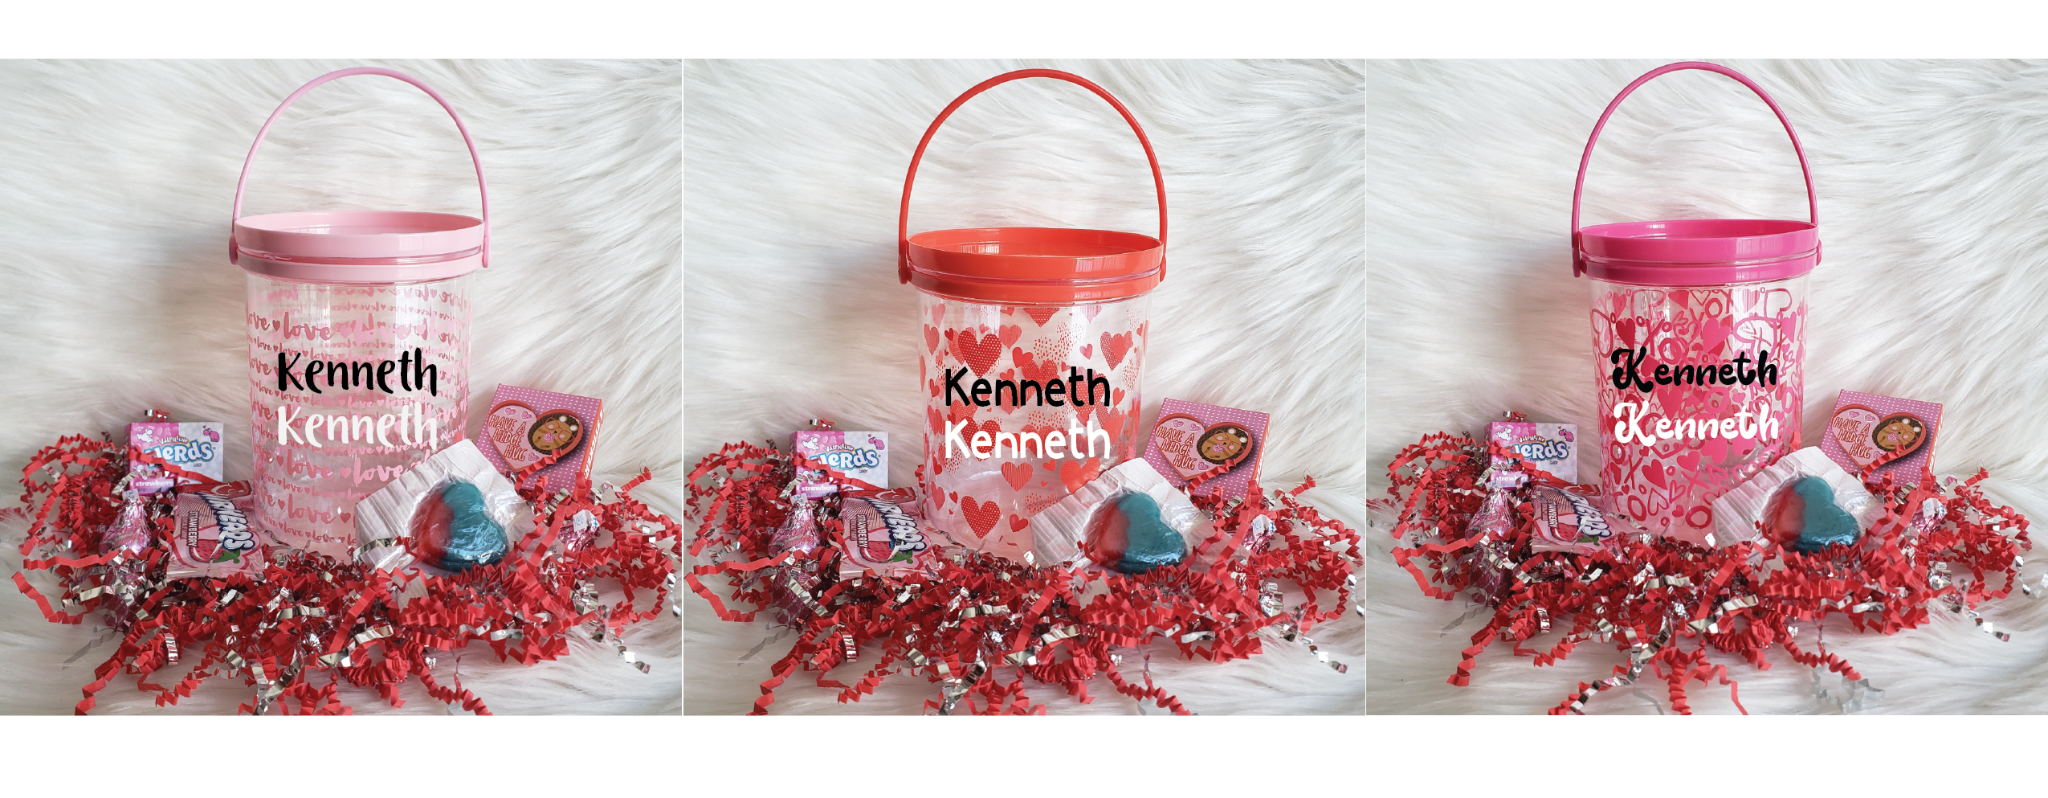 Personalized Valentine's Bucket